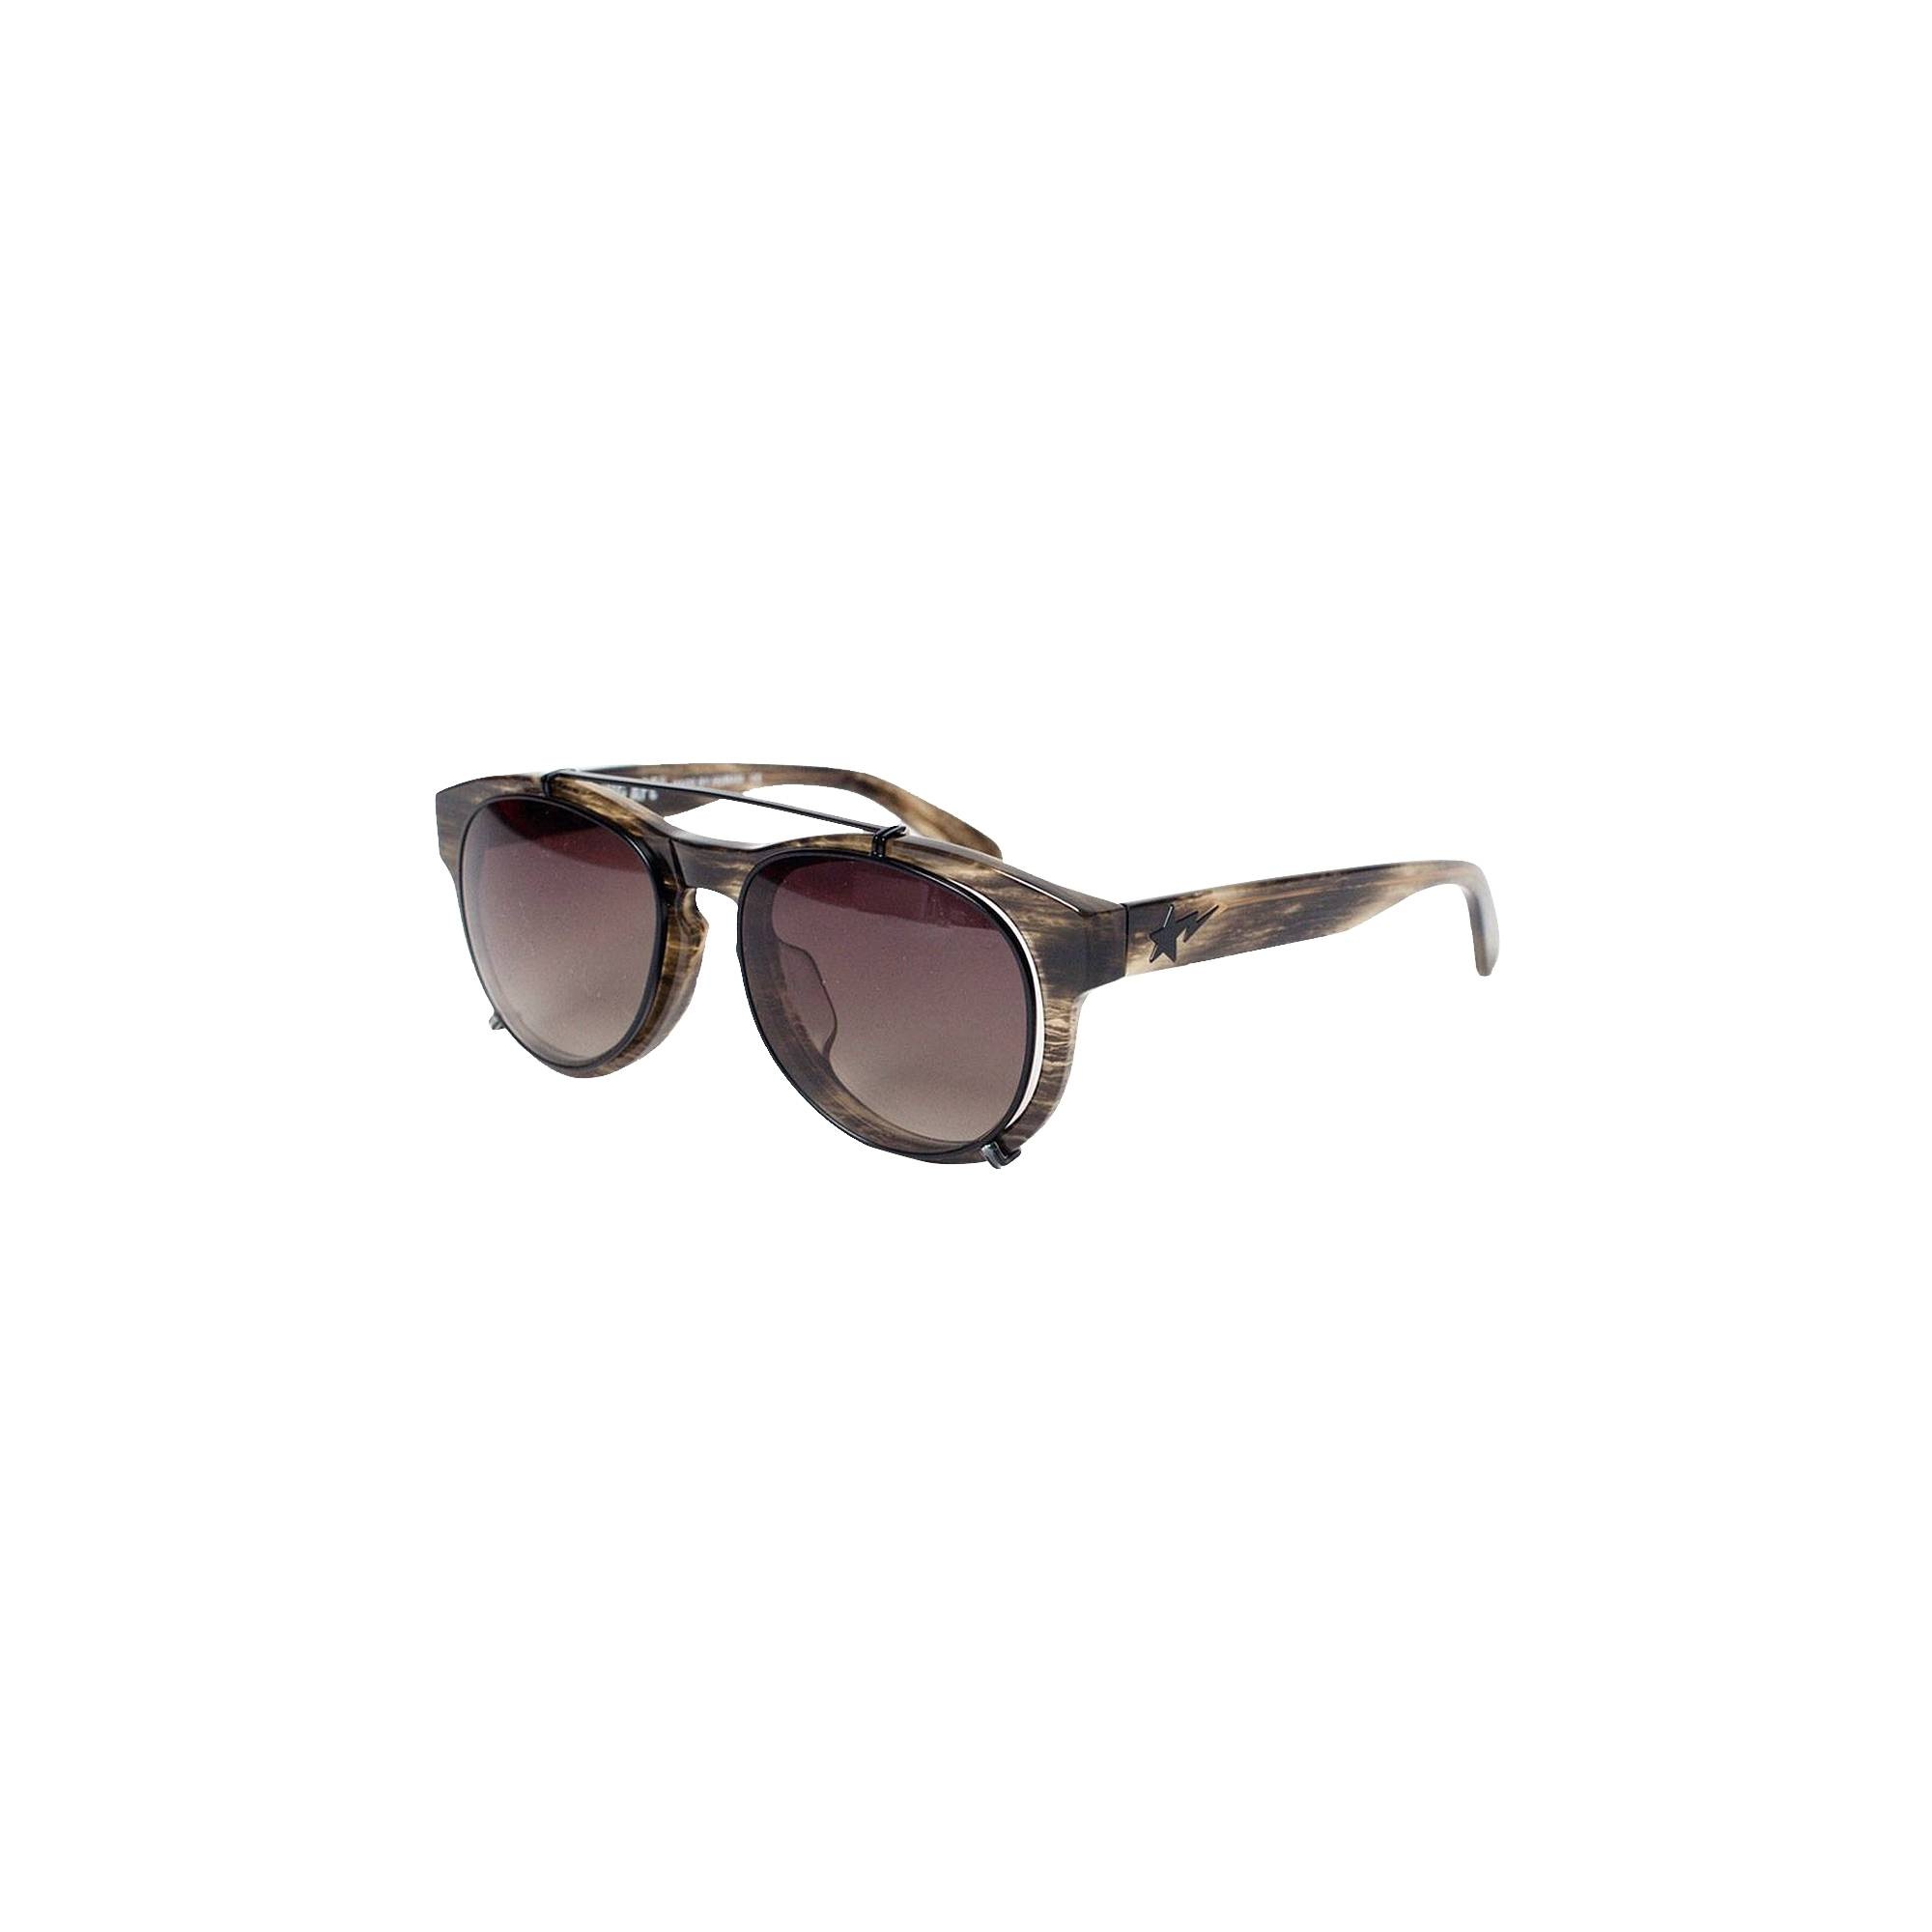 BAPE Sunglasses 'Brown' - 1